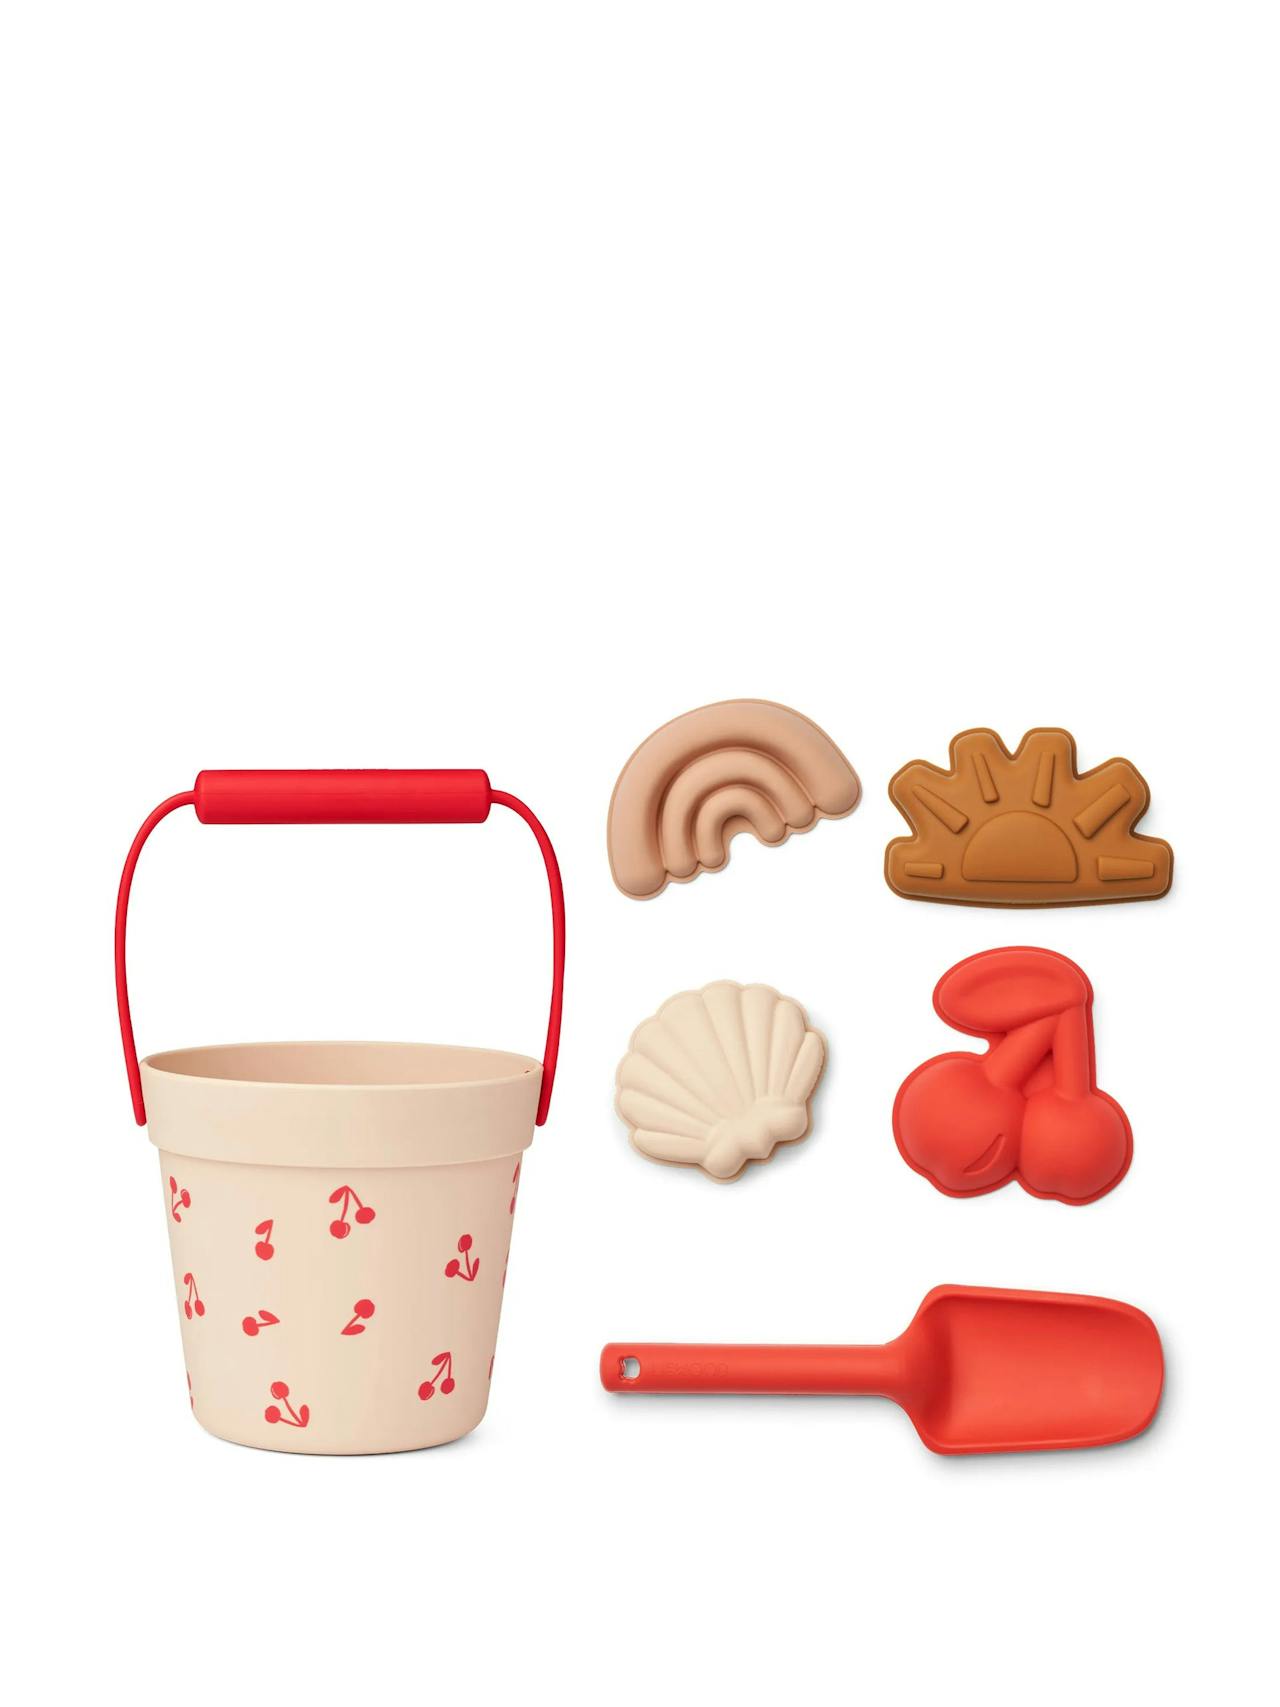 Dante beach bucket and accessories